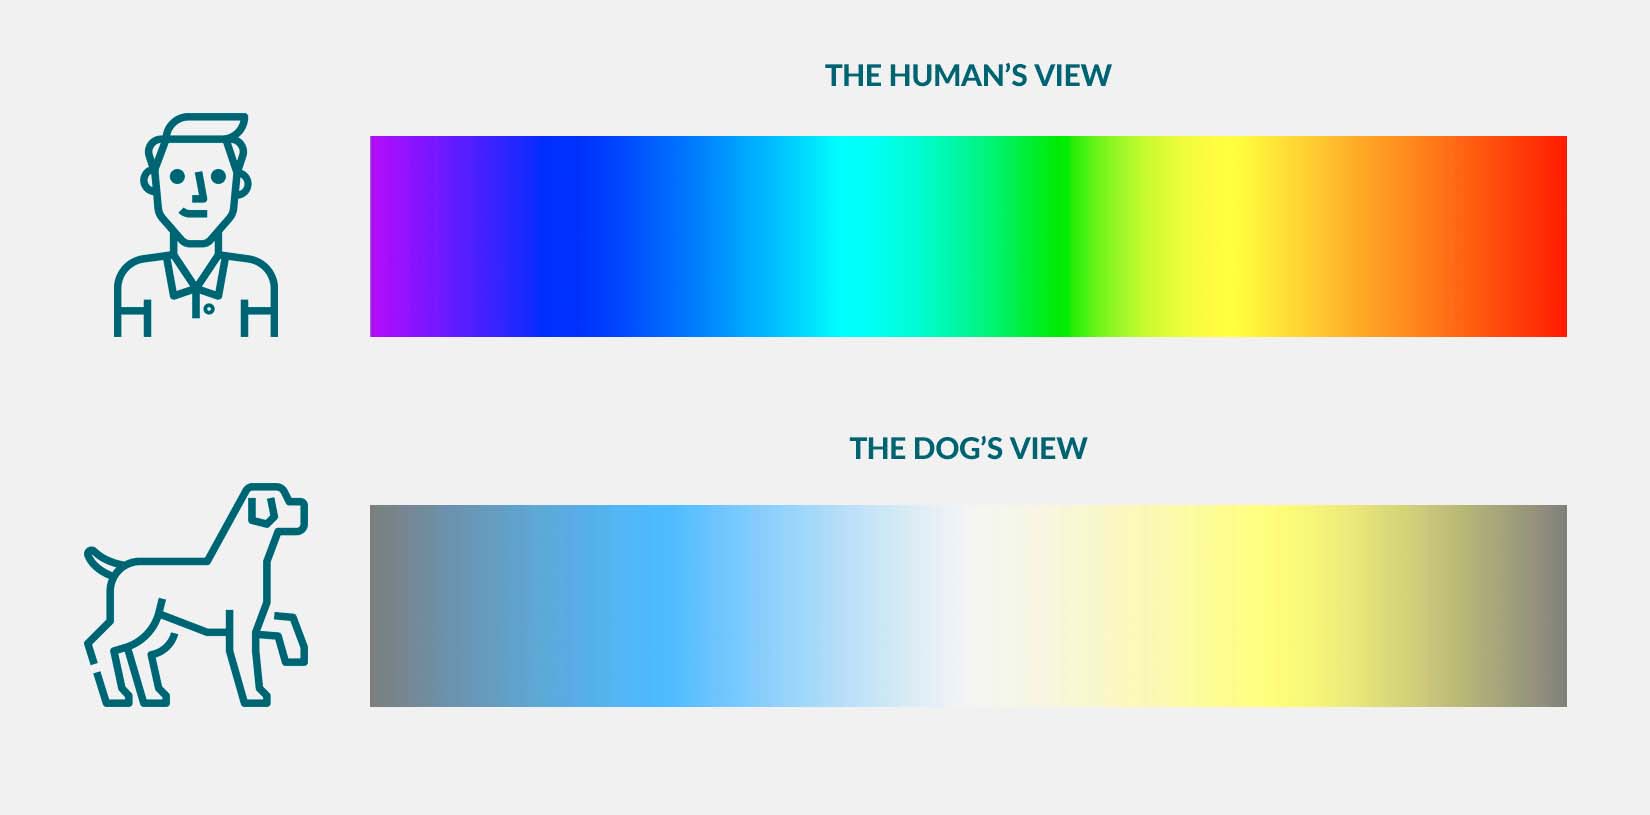 Colores de vista humana versus colores de vista de perro